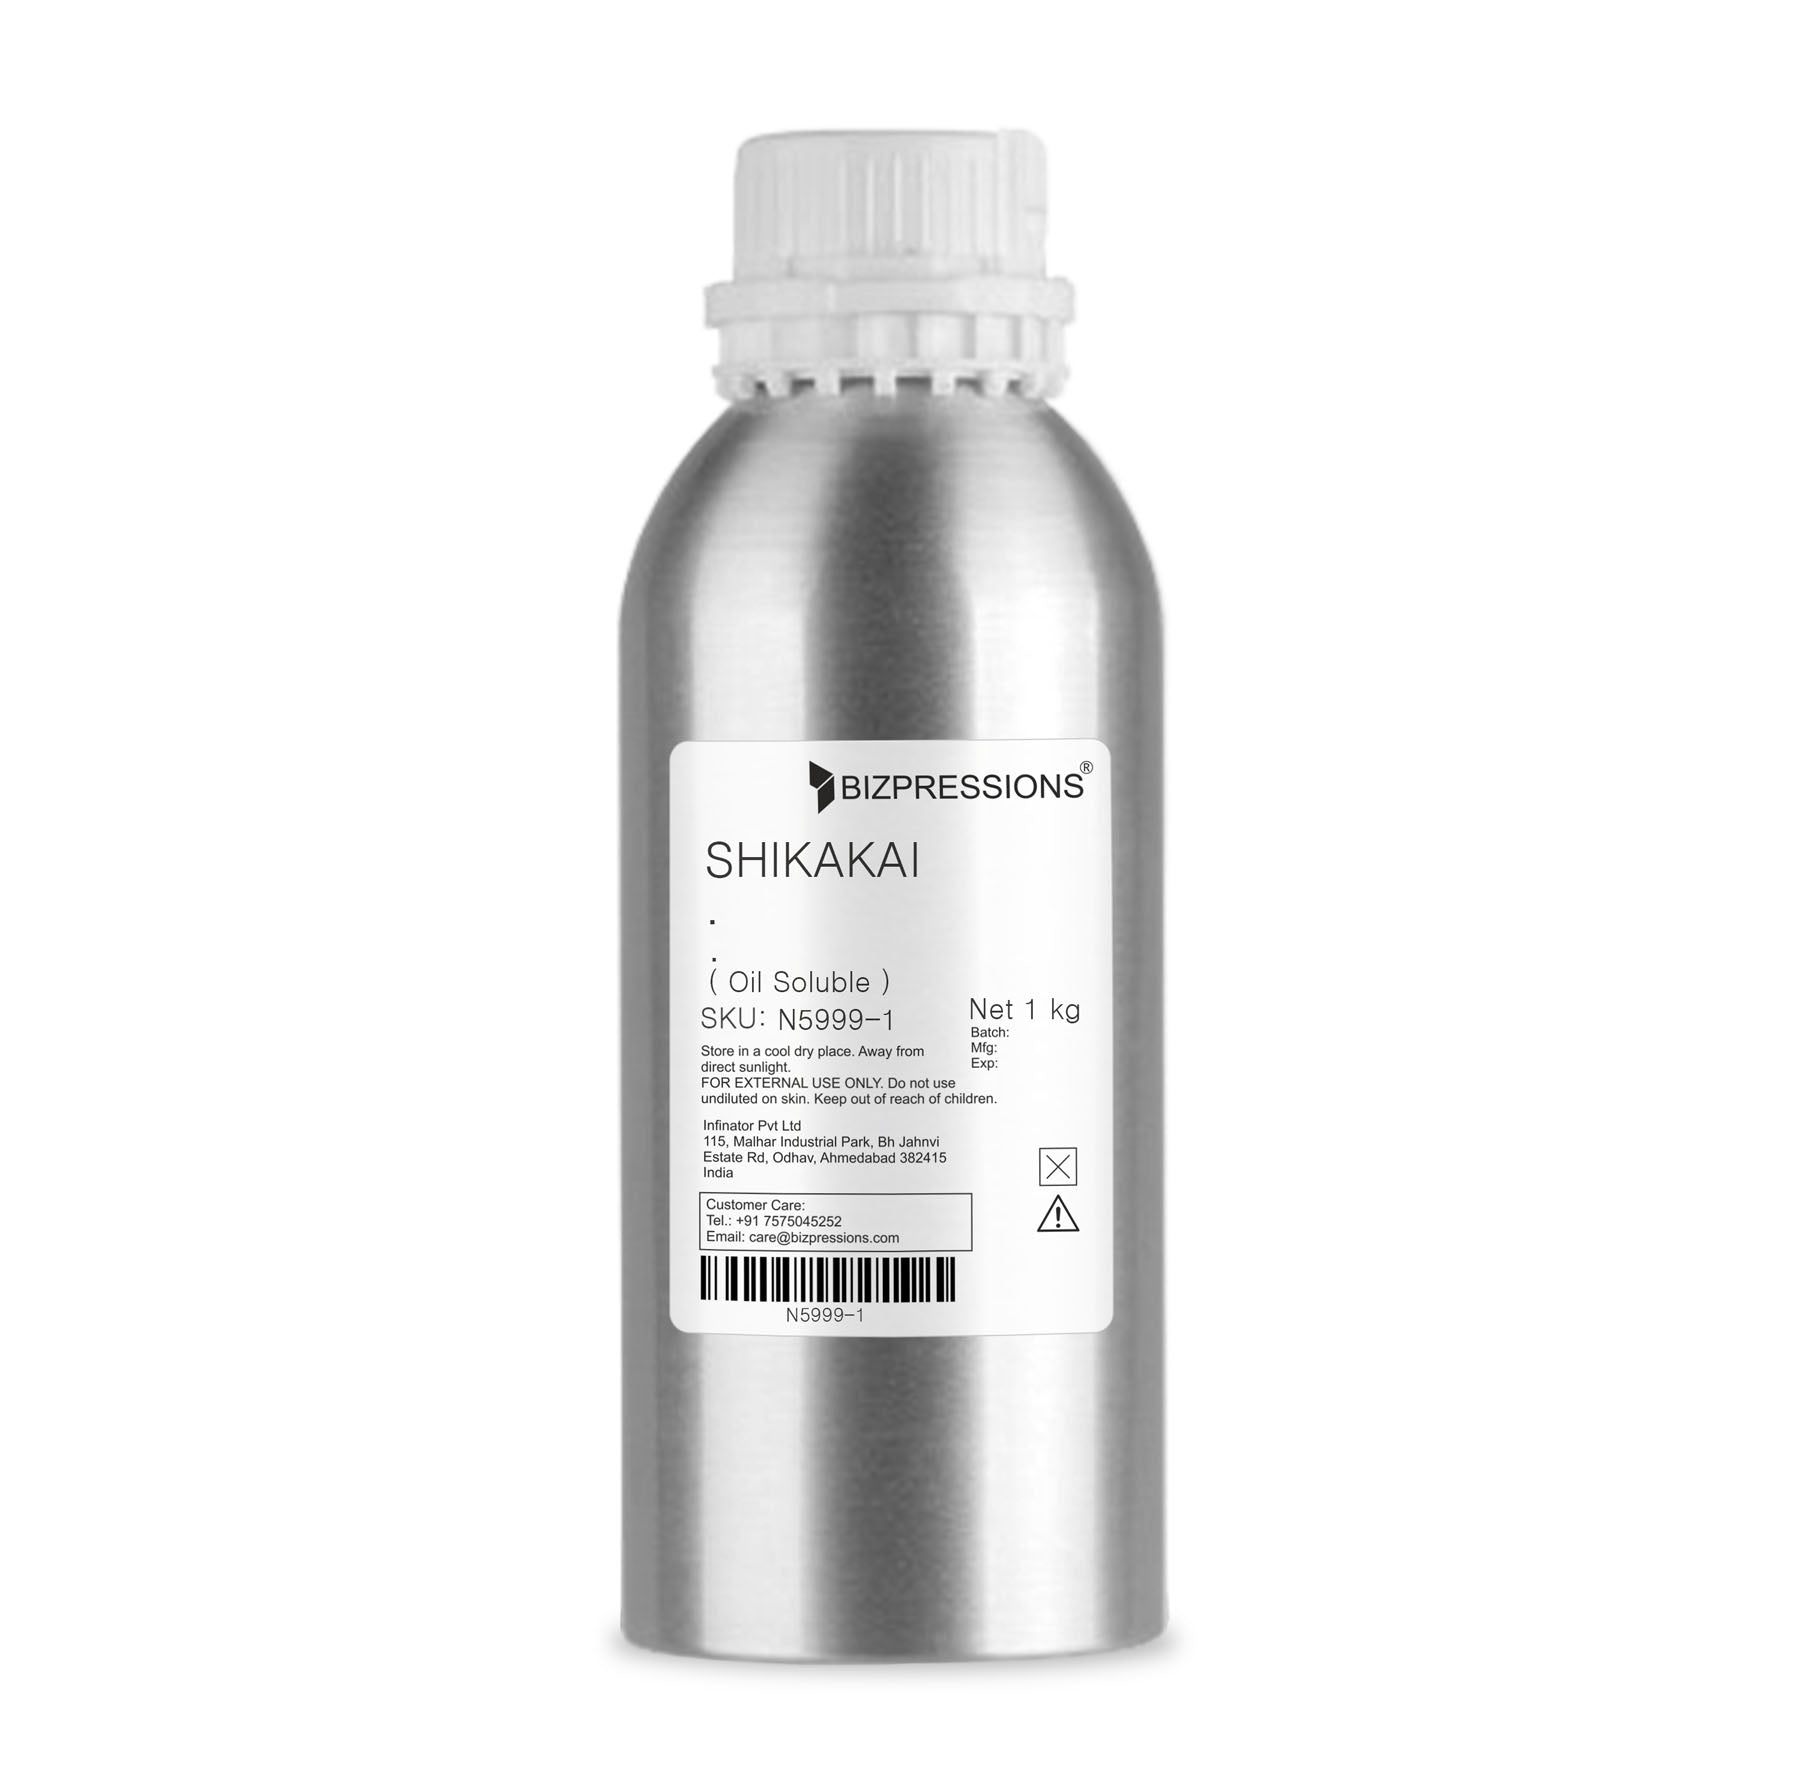 SHIKAKAI - Fragrance ( Oil Soluble ) - 1 kg